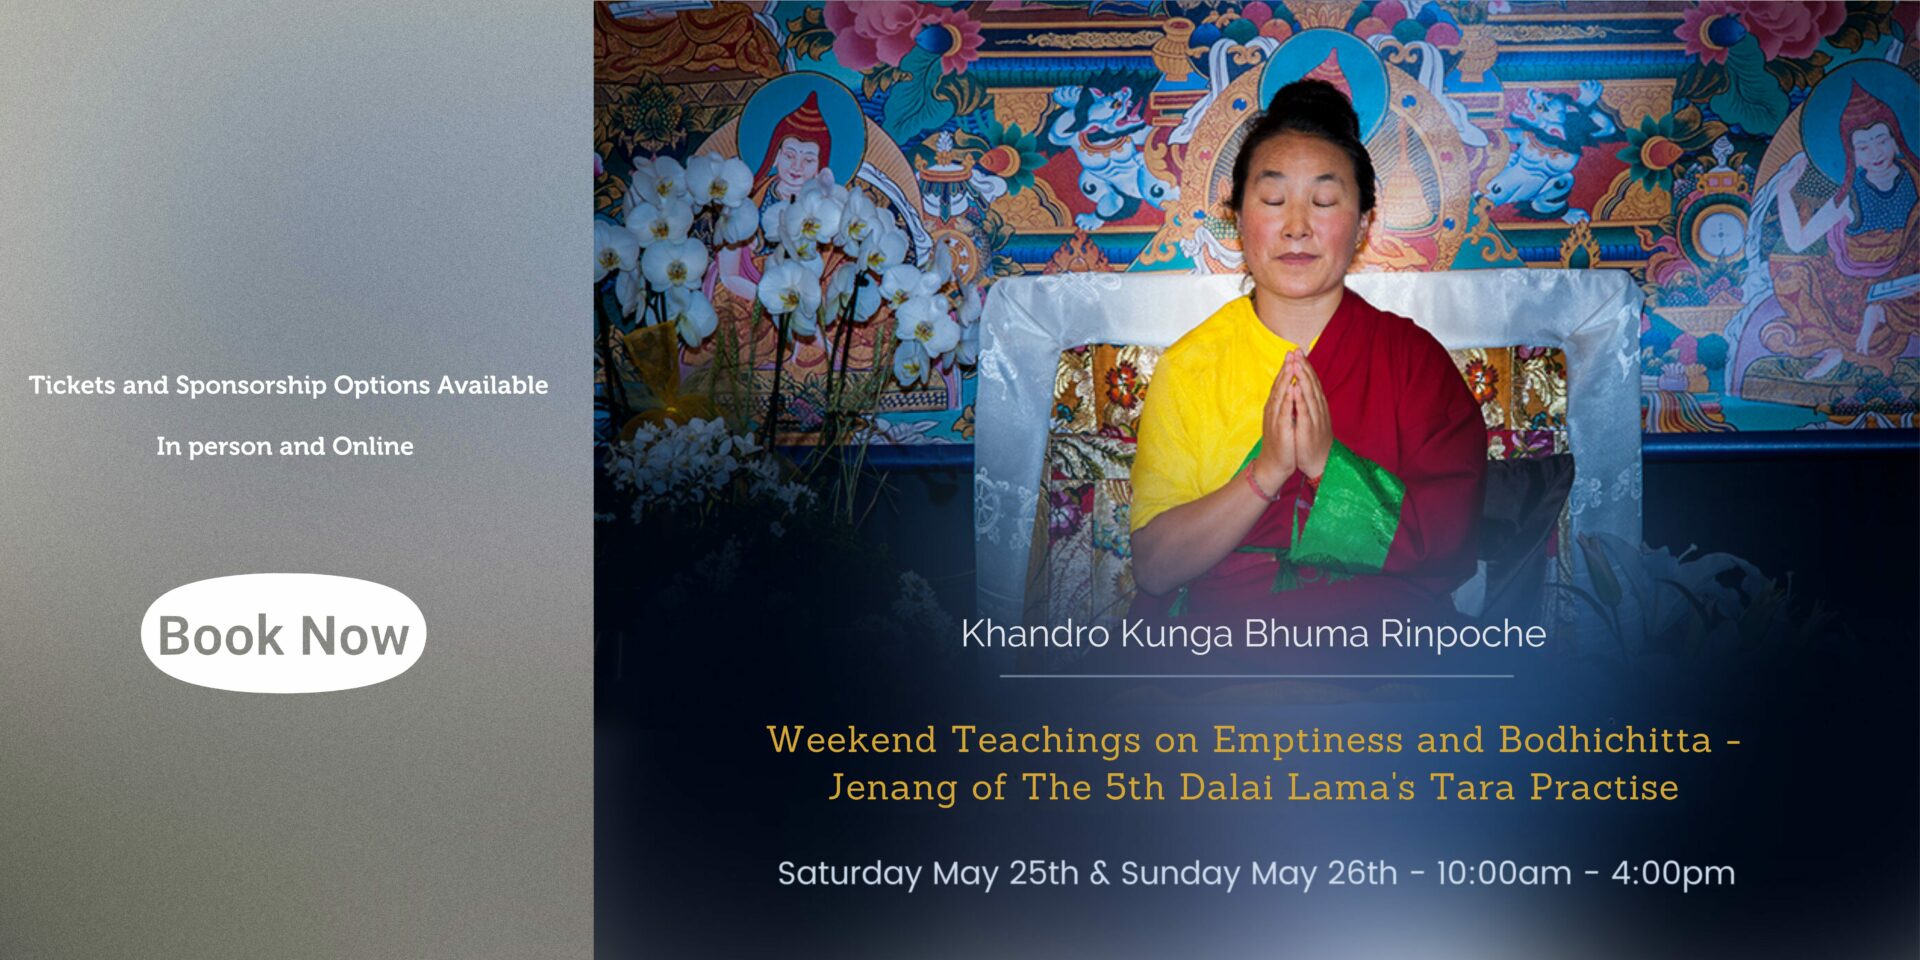 Khandro Kunga Bhuma Rinpoche